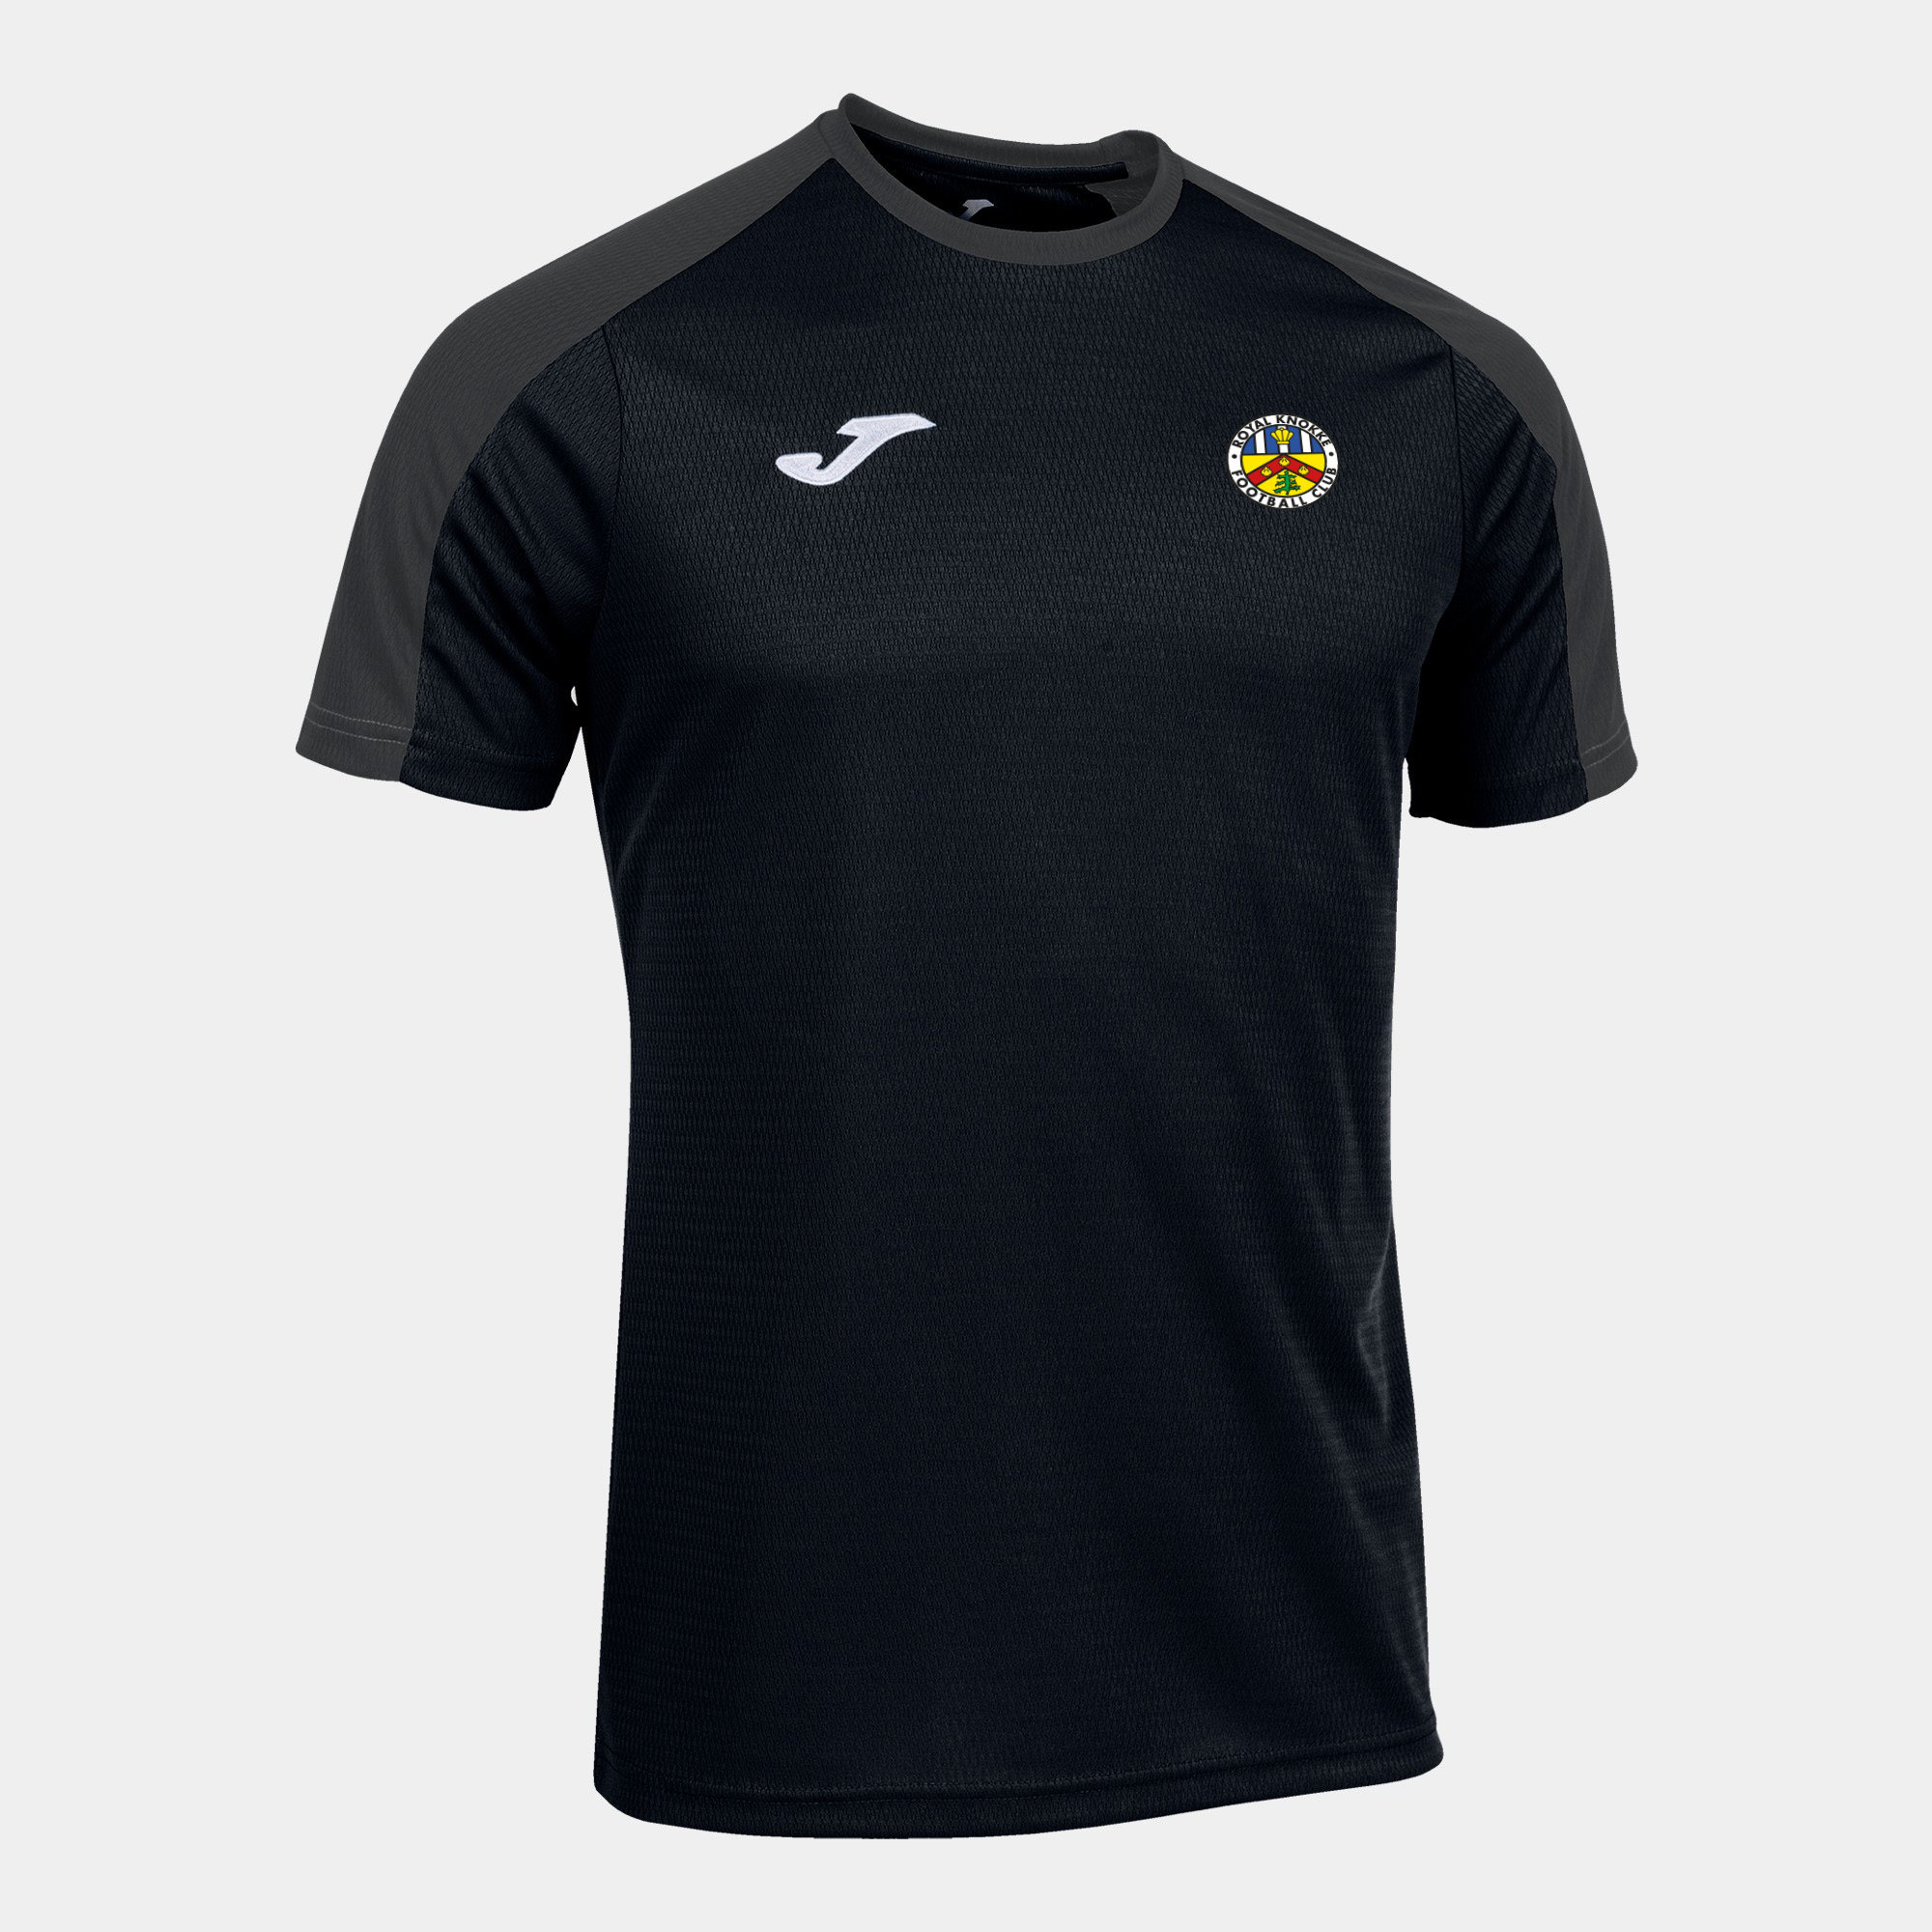 Royal Knokke FC - Shirt short sleeve man Eco Championship black dark gray 